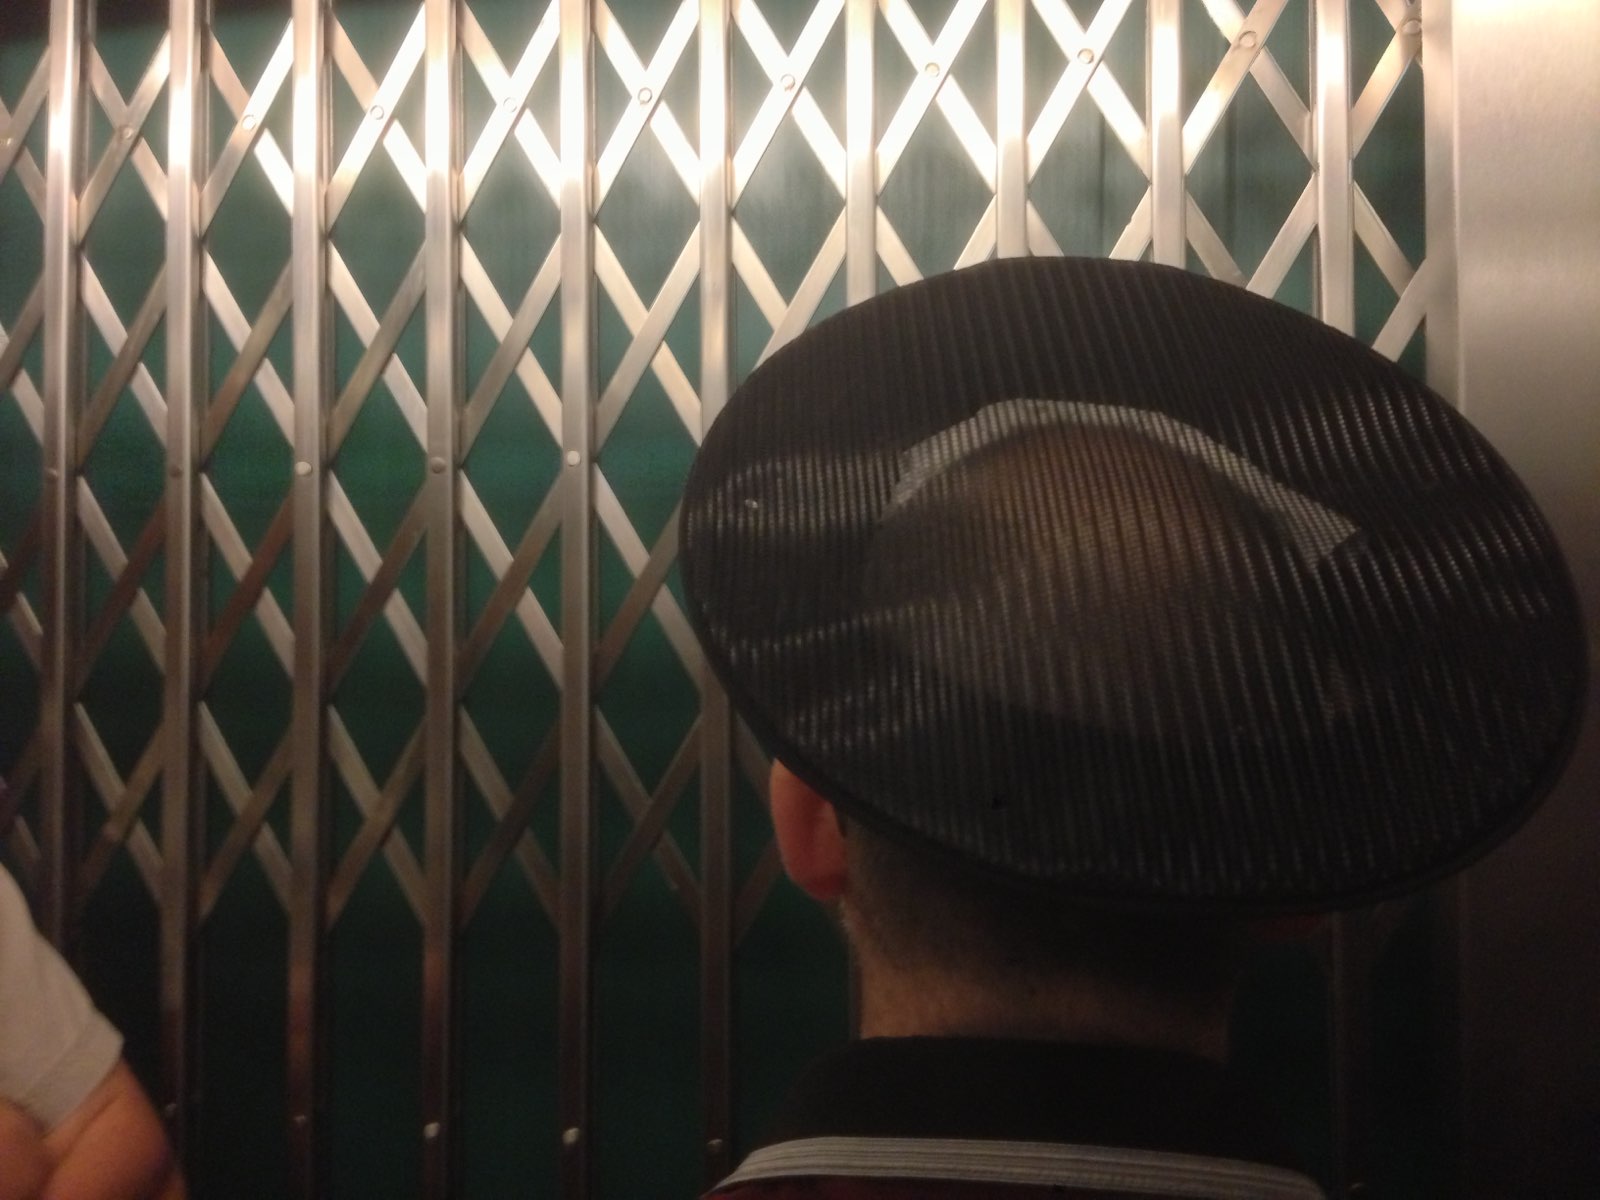 Empire State Building clerk hat